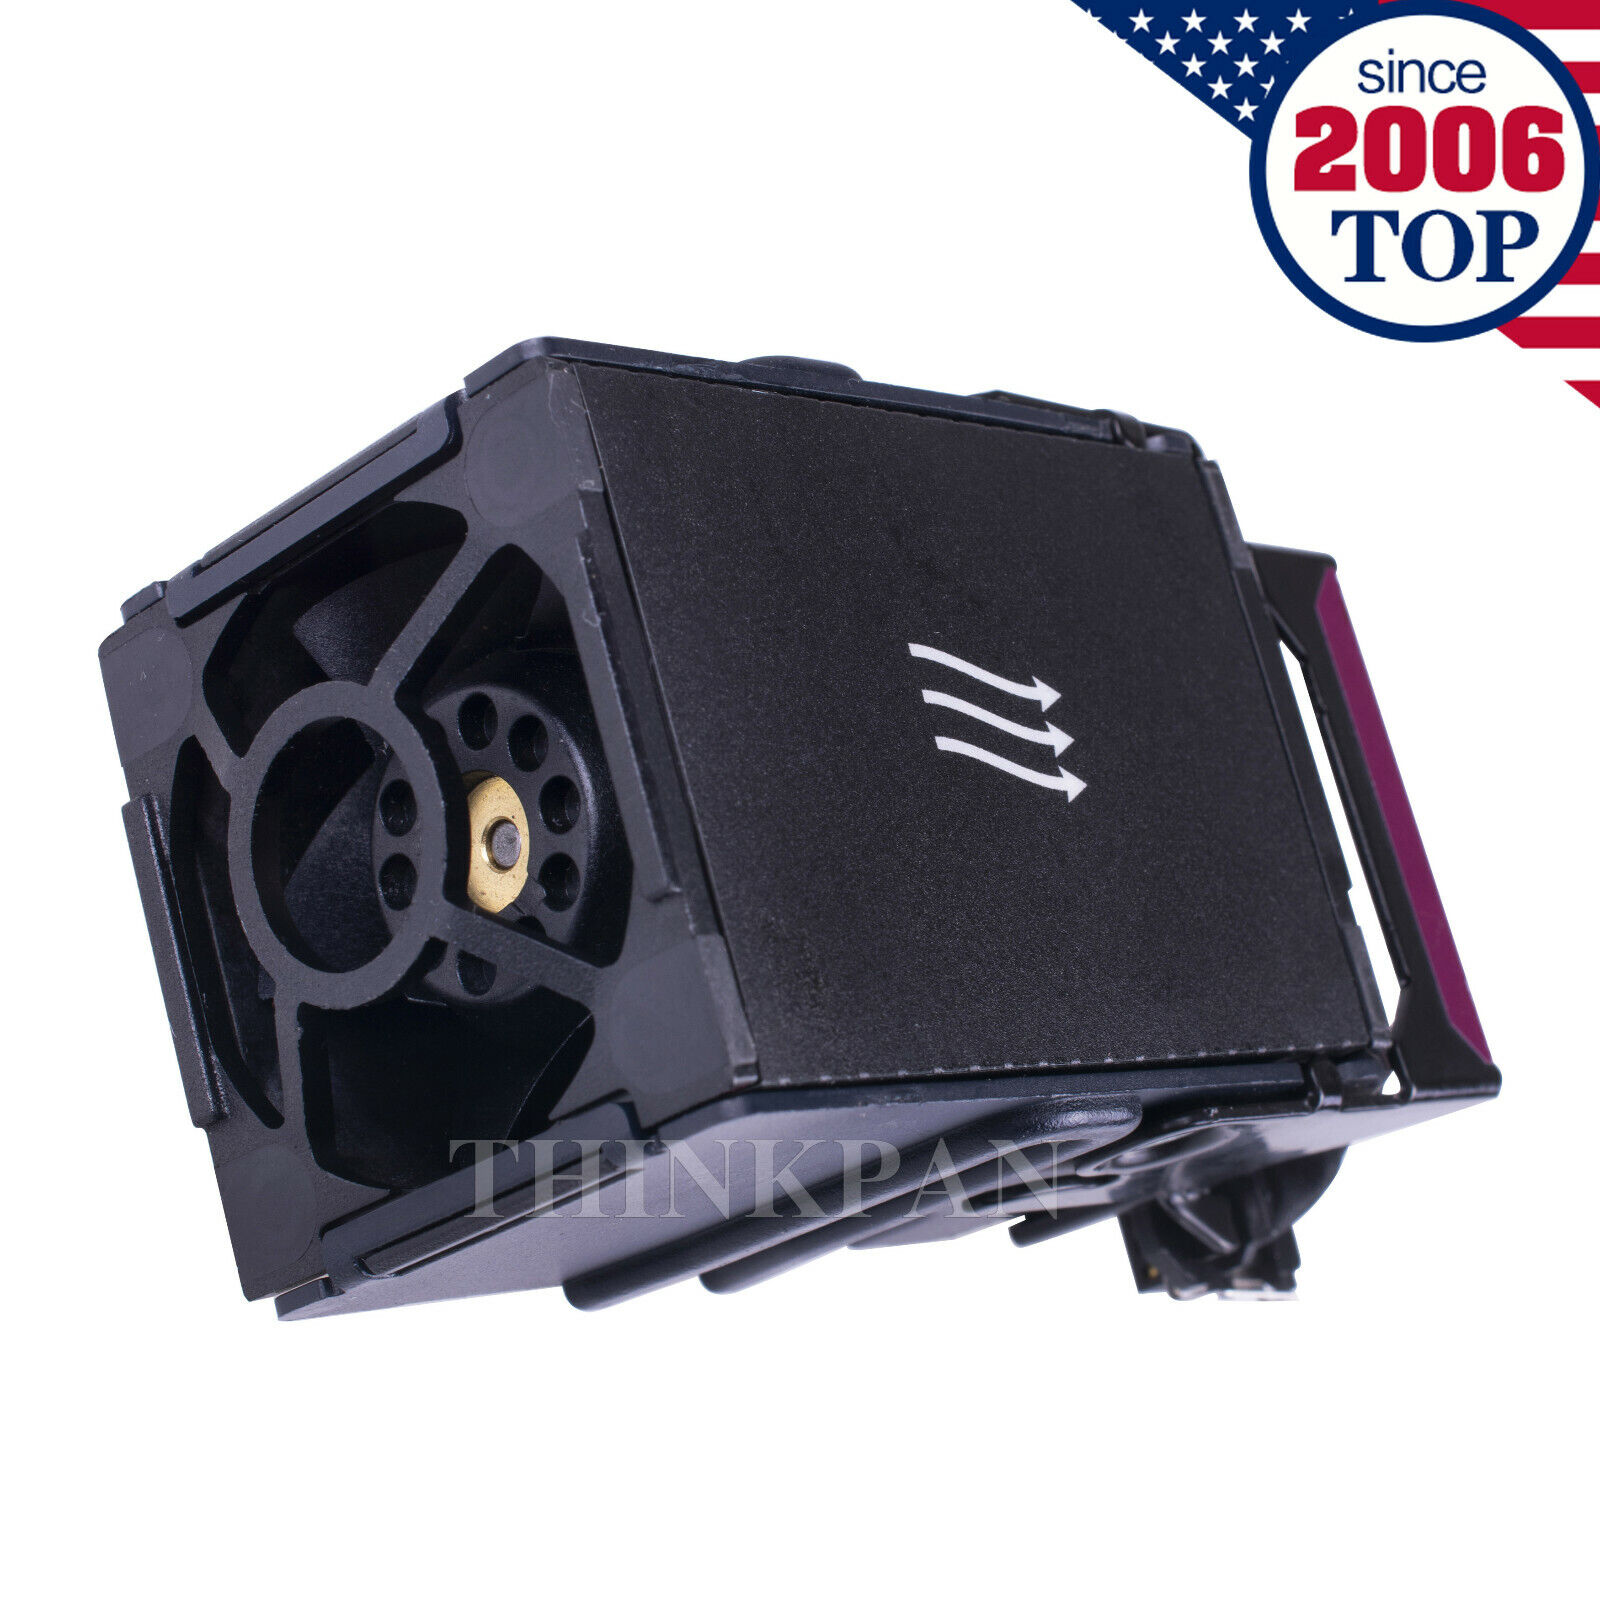 Cooling Fan for HP DL360p DL360e G8 Gen8 654752-001 667882-001 697183-001 US